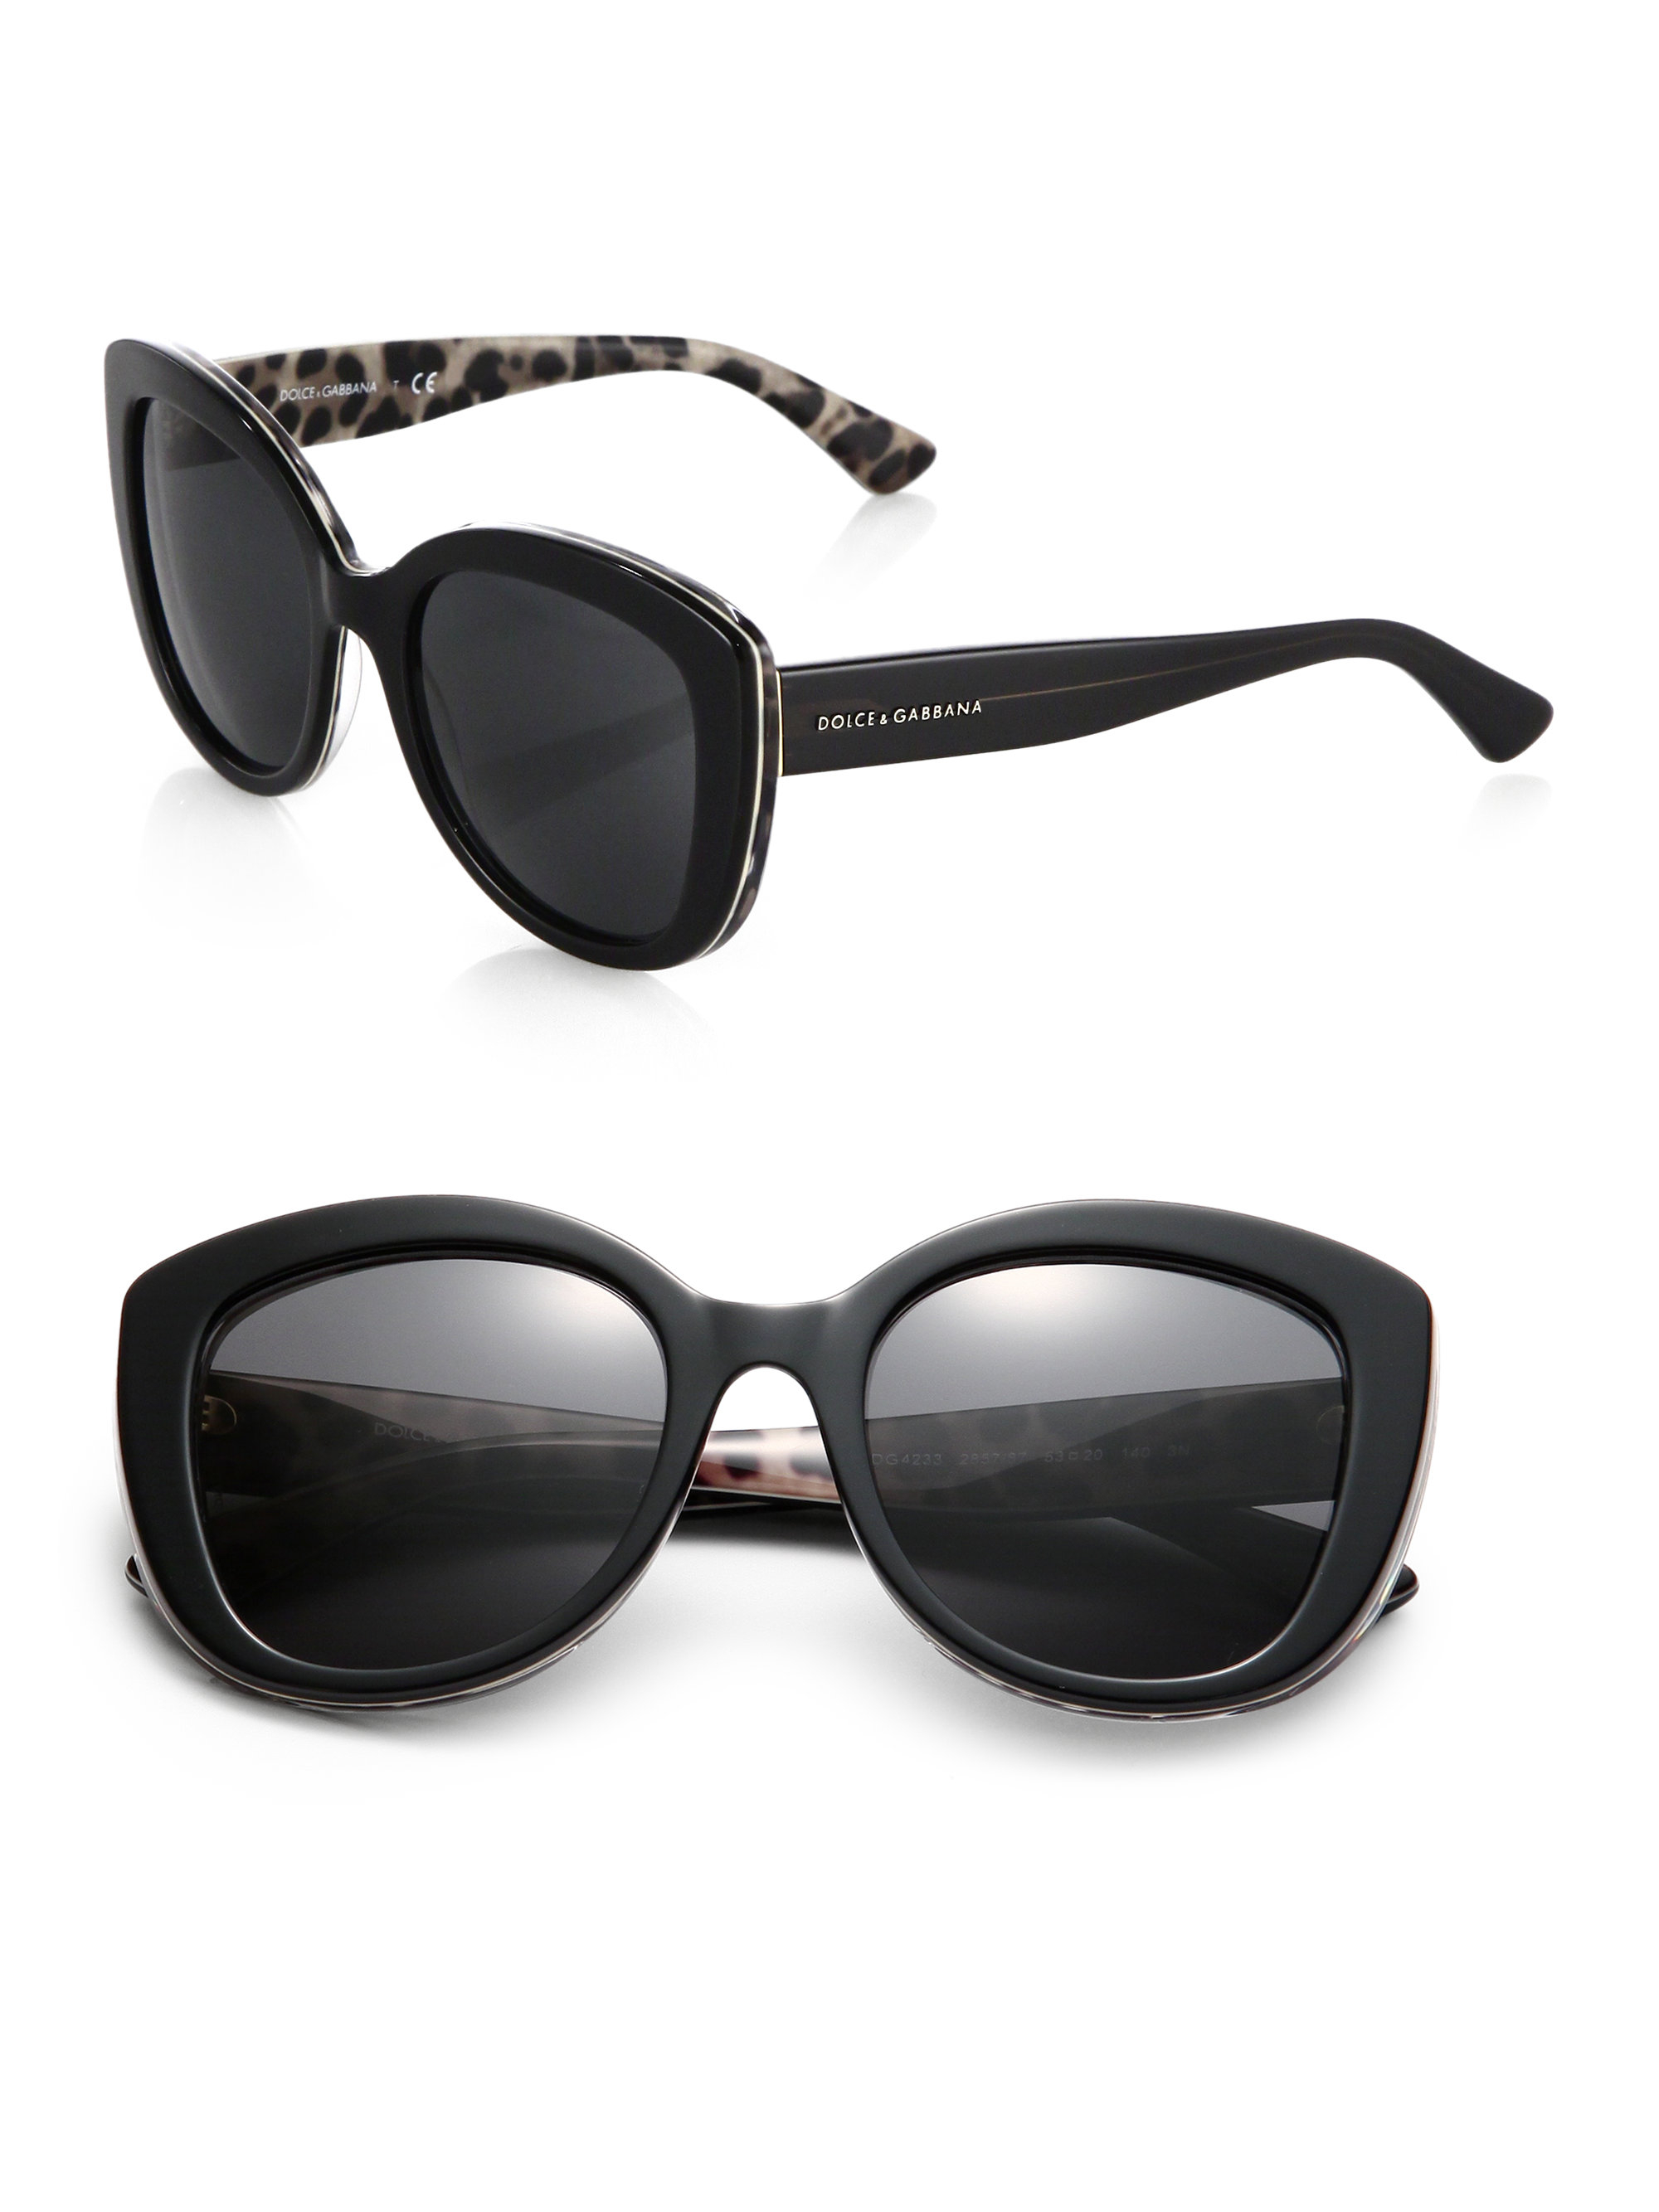 Dolce & gabbana Leopard Print-Trimmed 53Mm Cat'S-Eye Sunglasses in ...